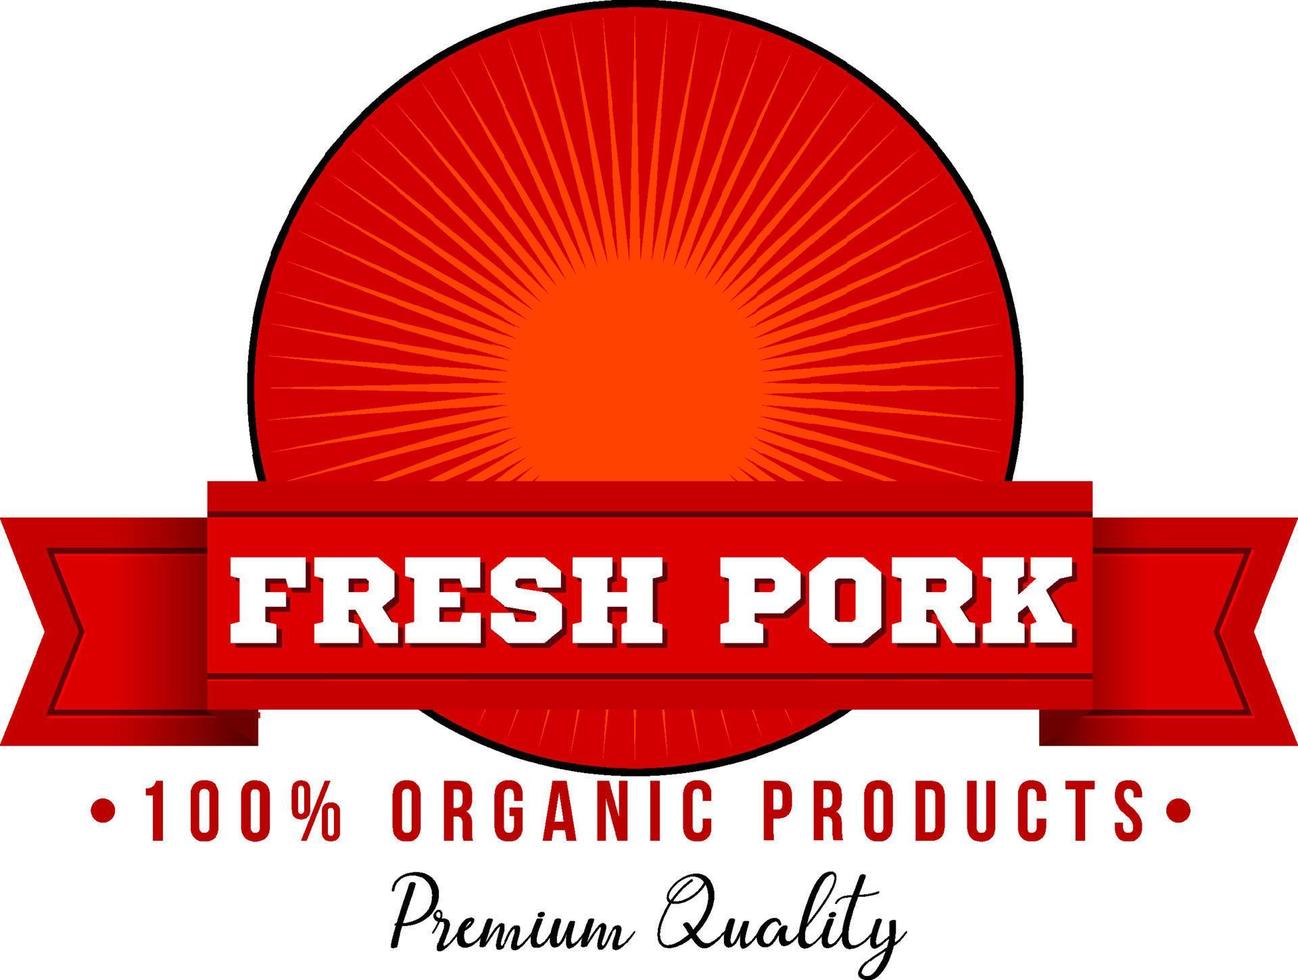 Fresh pork organic product logo template vector